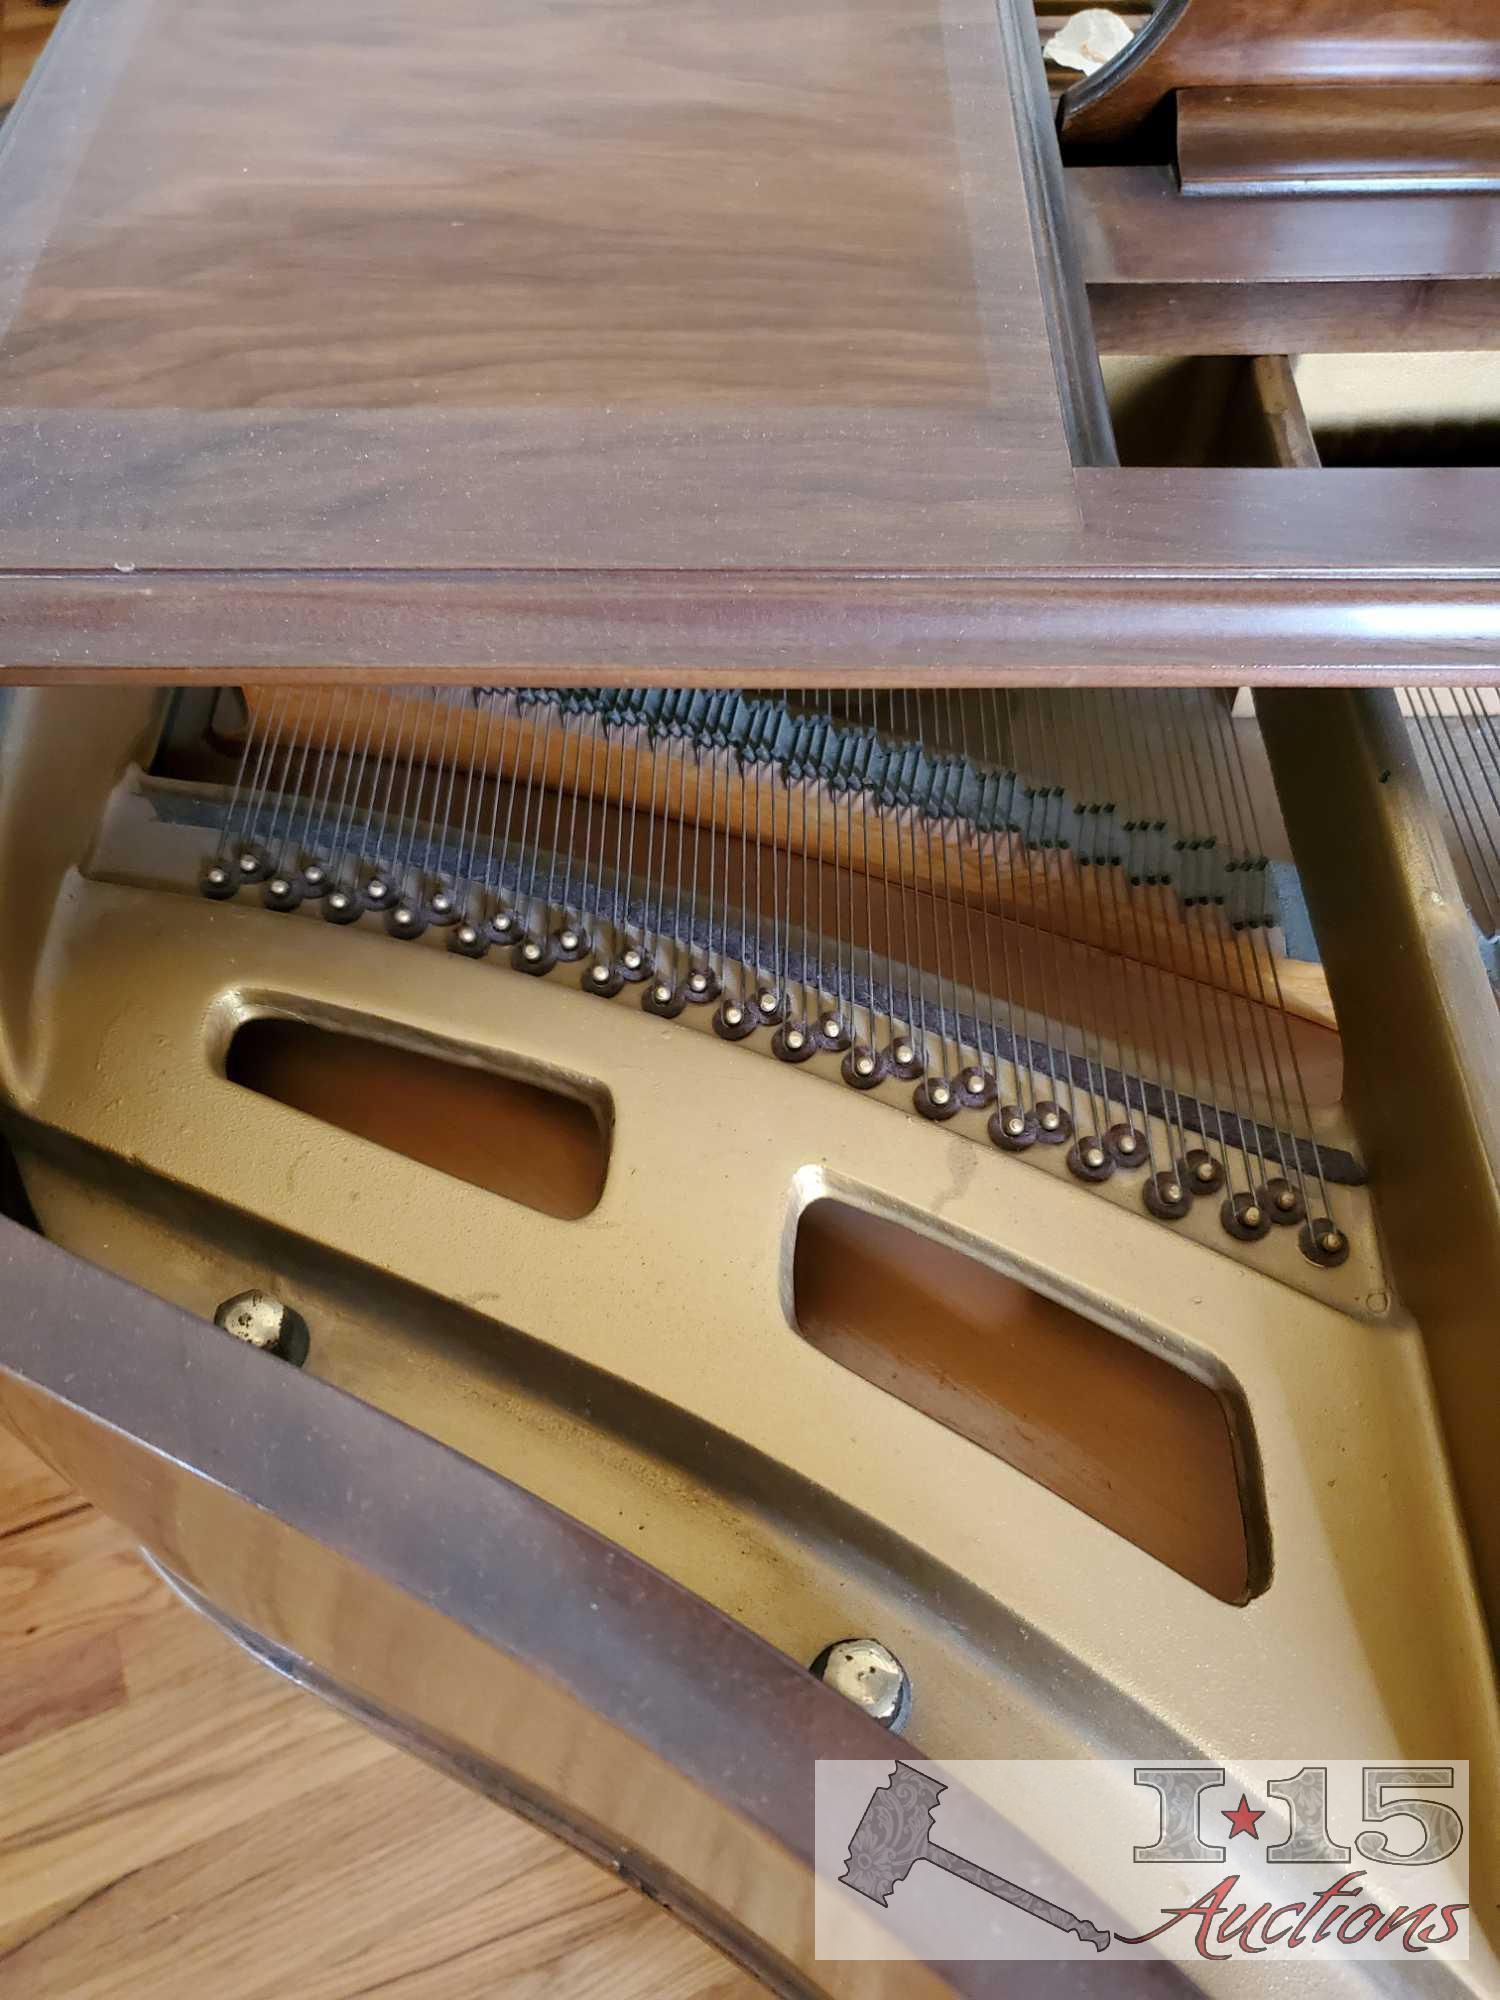 A 1937 Chickering Baby Grand Piano